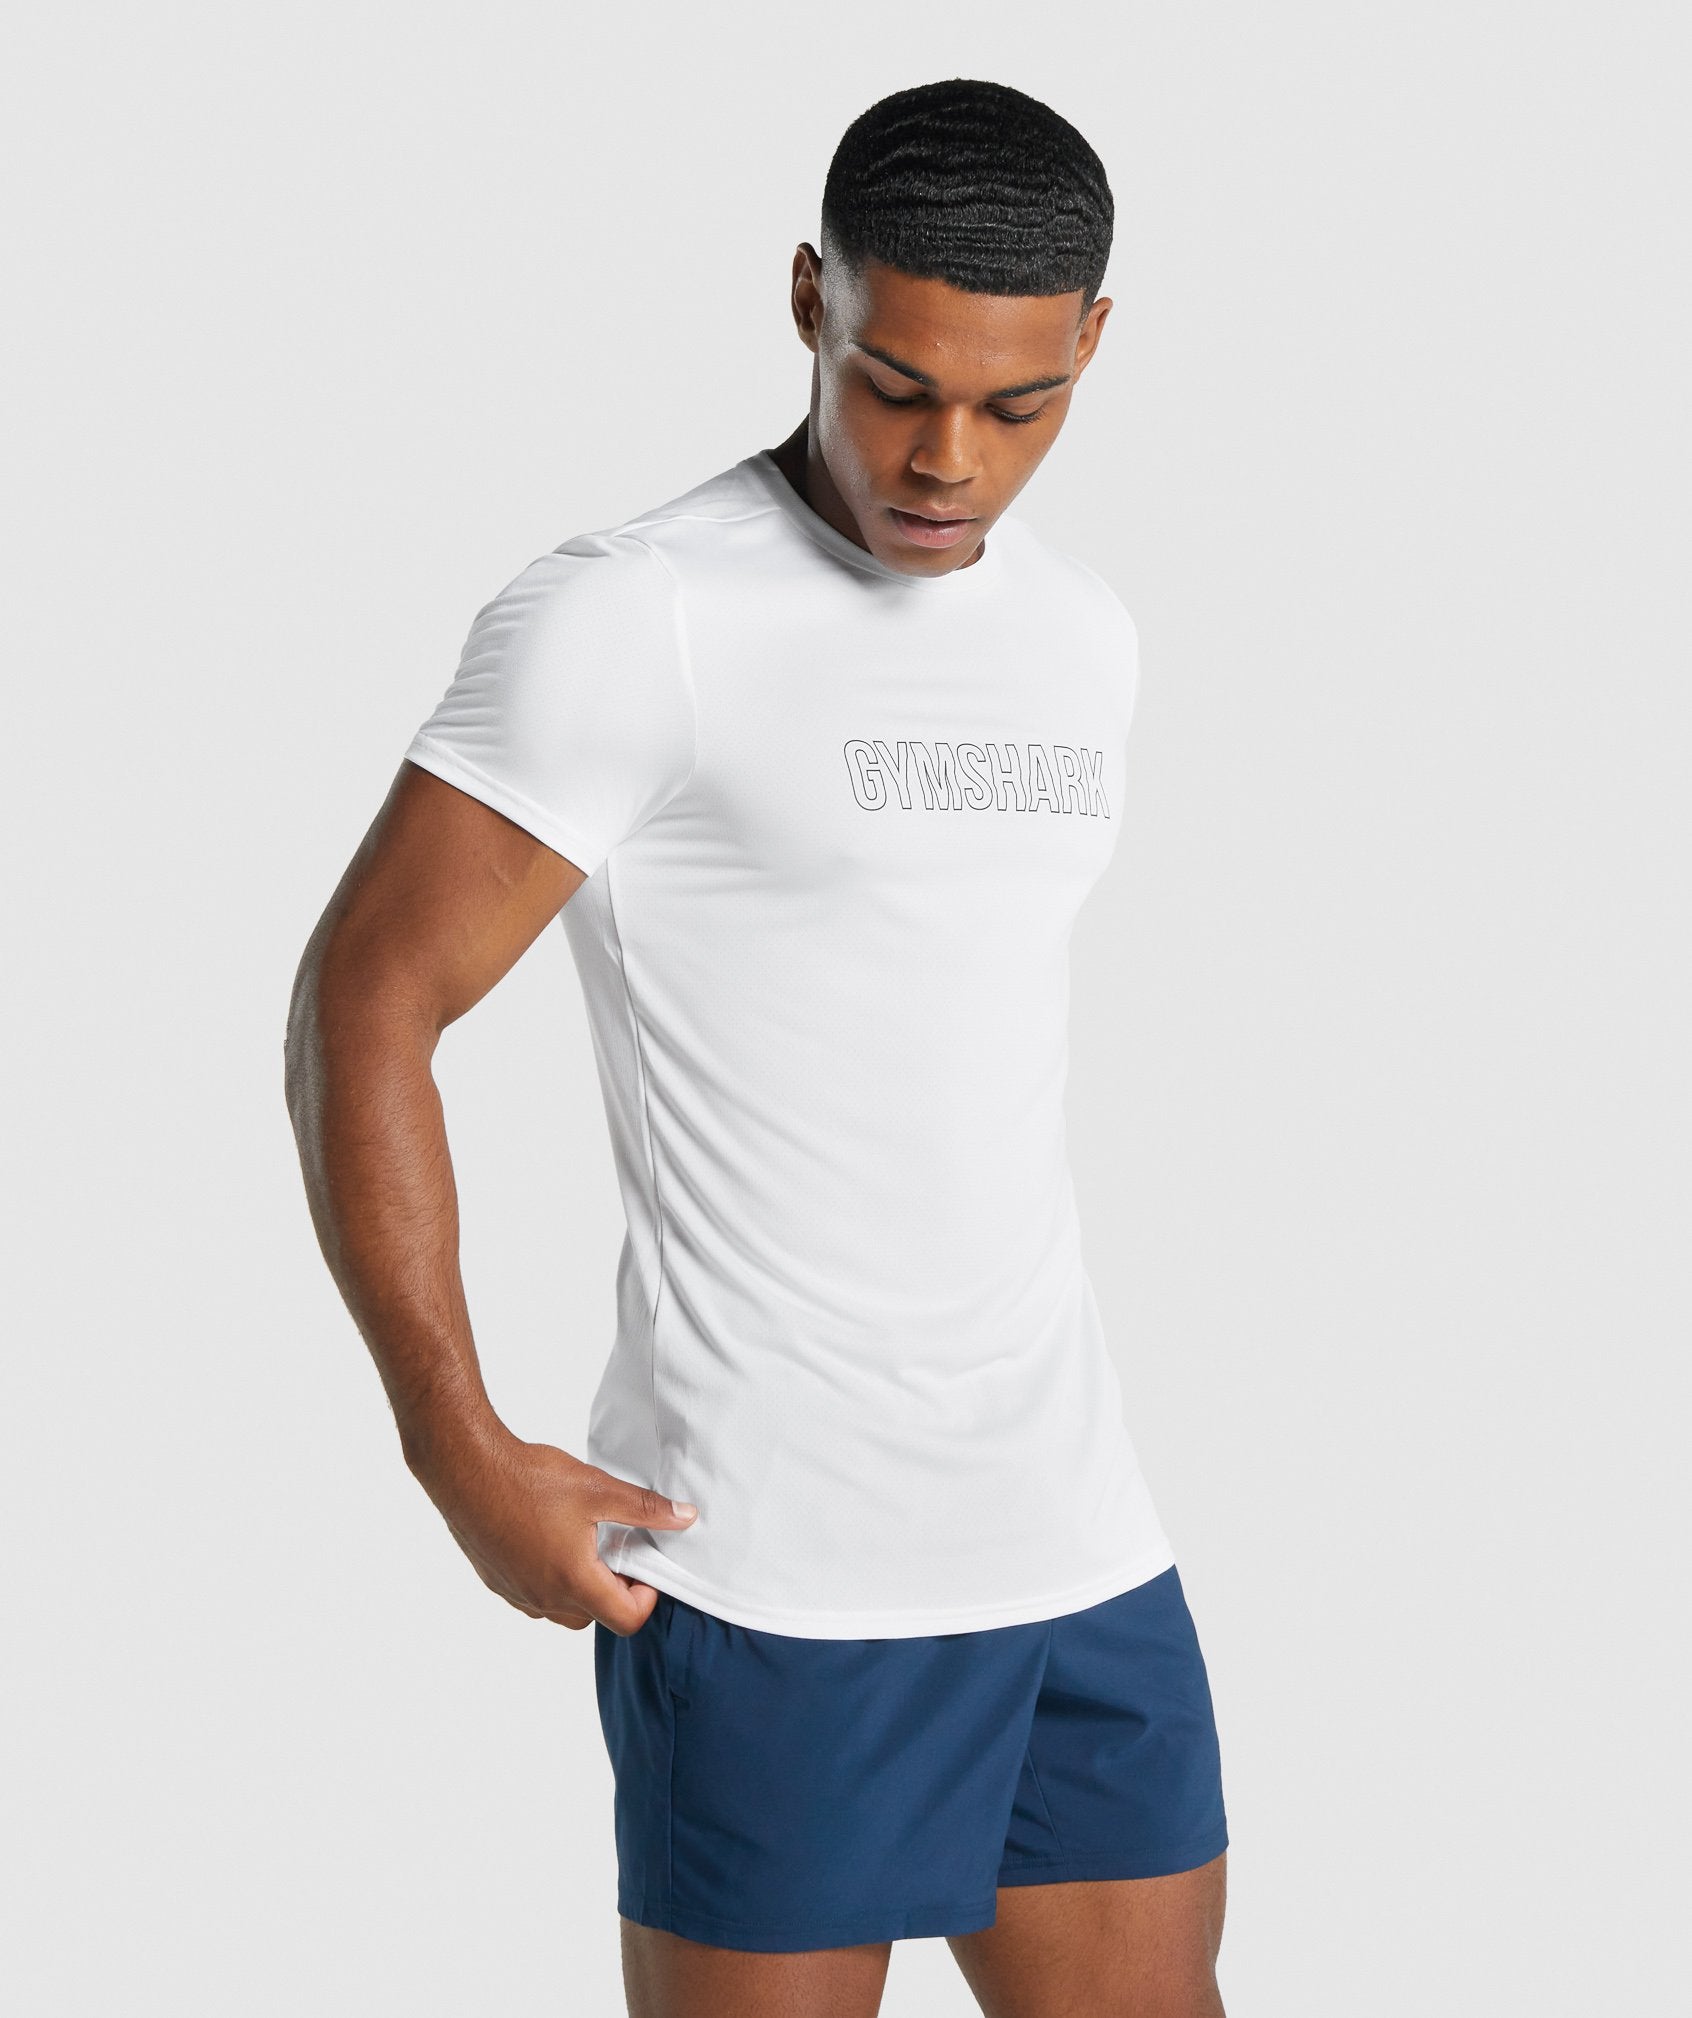 Shorts Gymshark  Arrival Long Sleeve Graphic T-Shirt - White